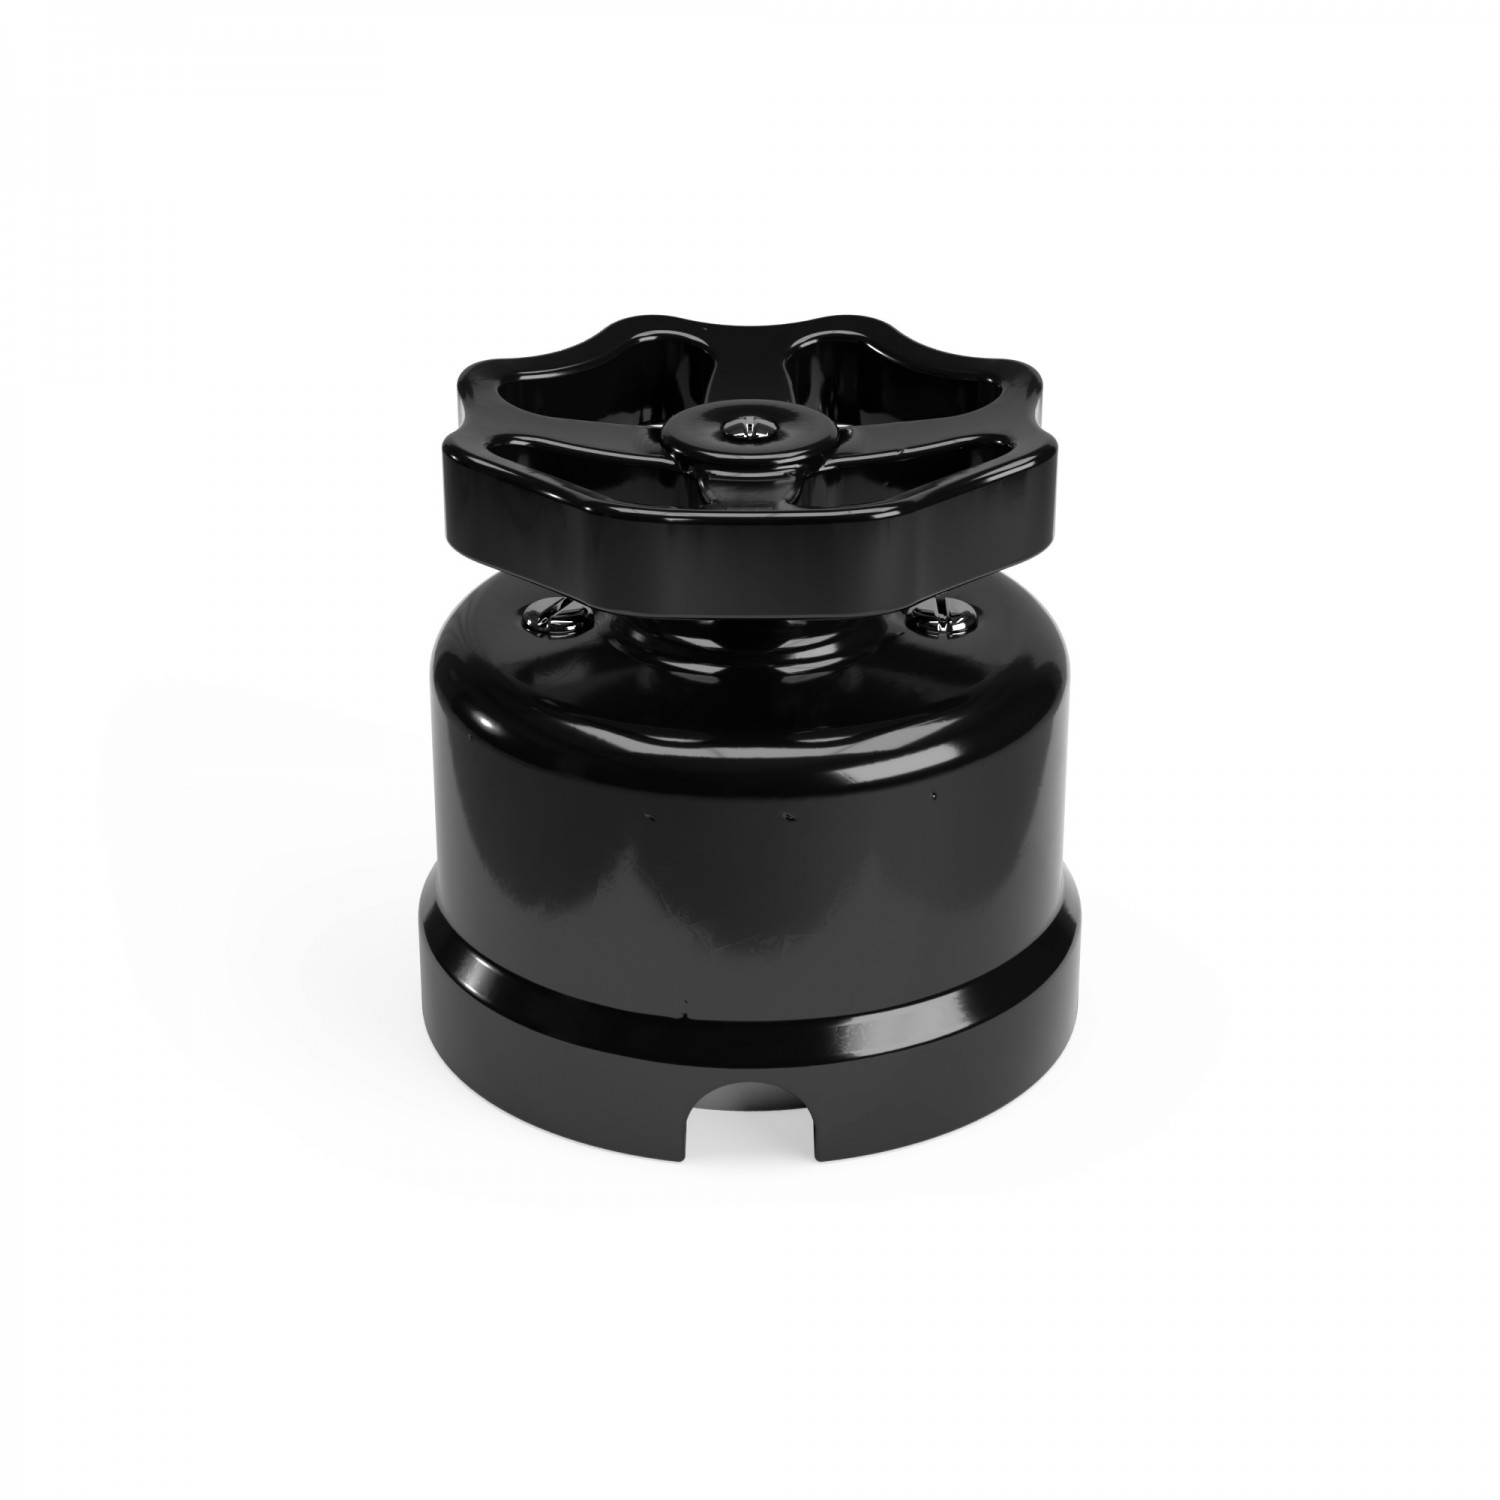 Switch/Diverter in black porcelain with knob